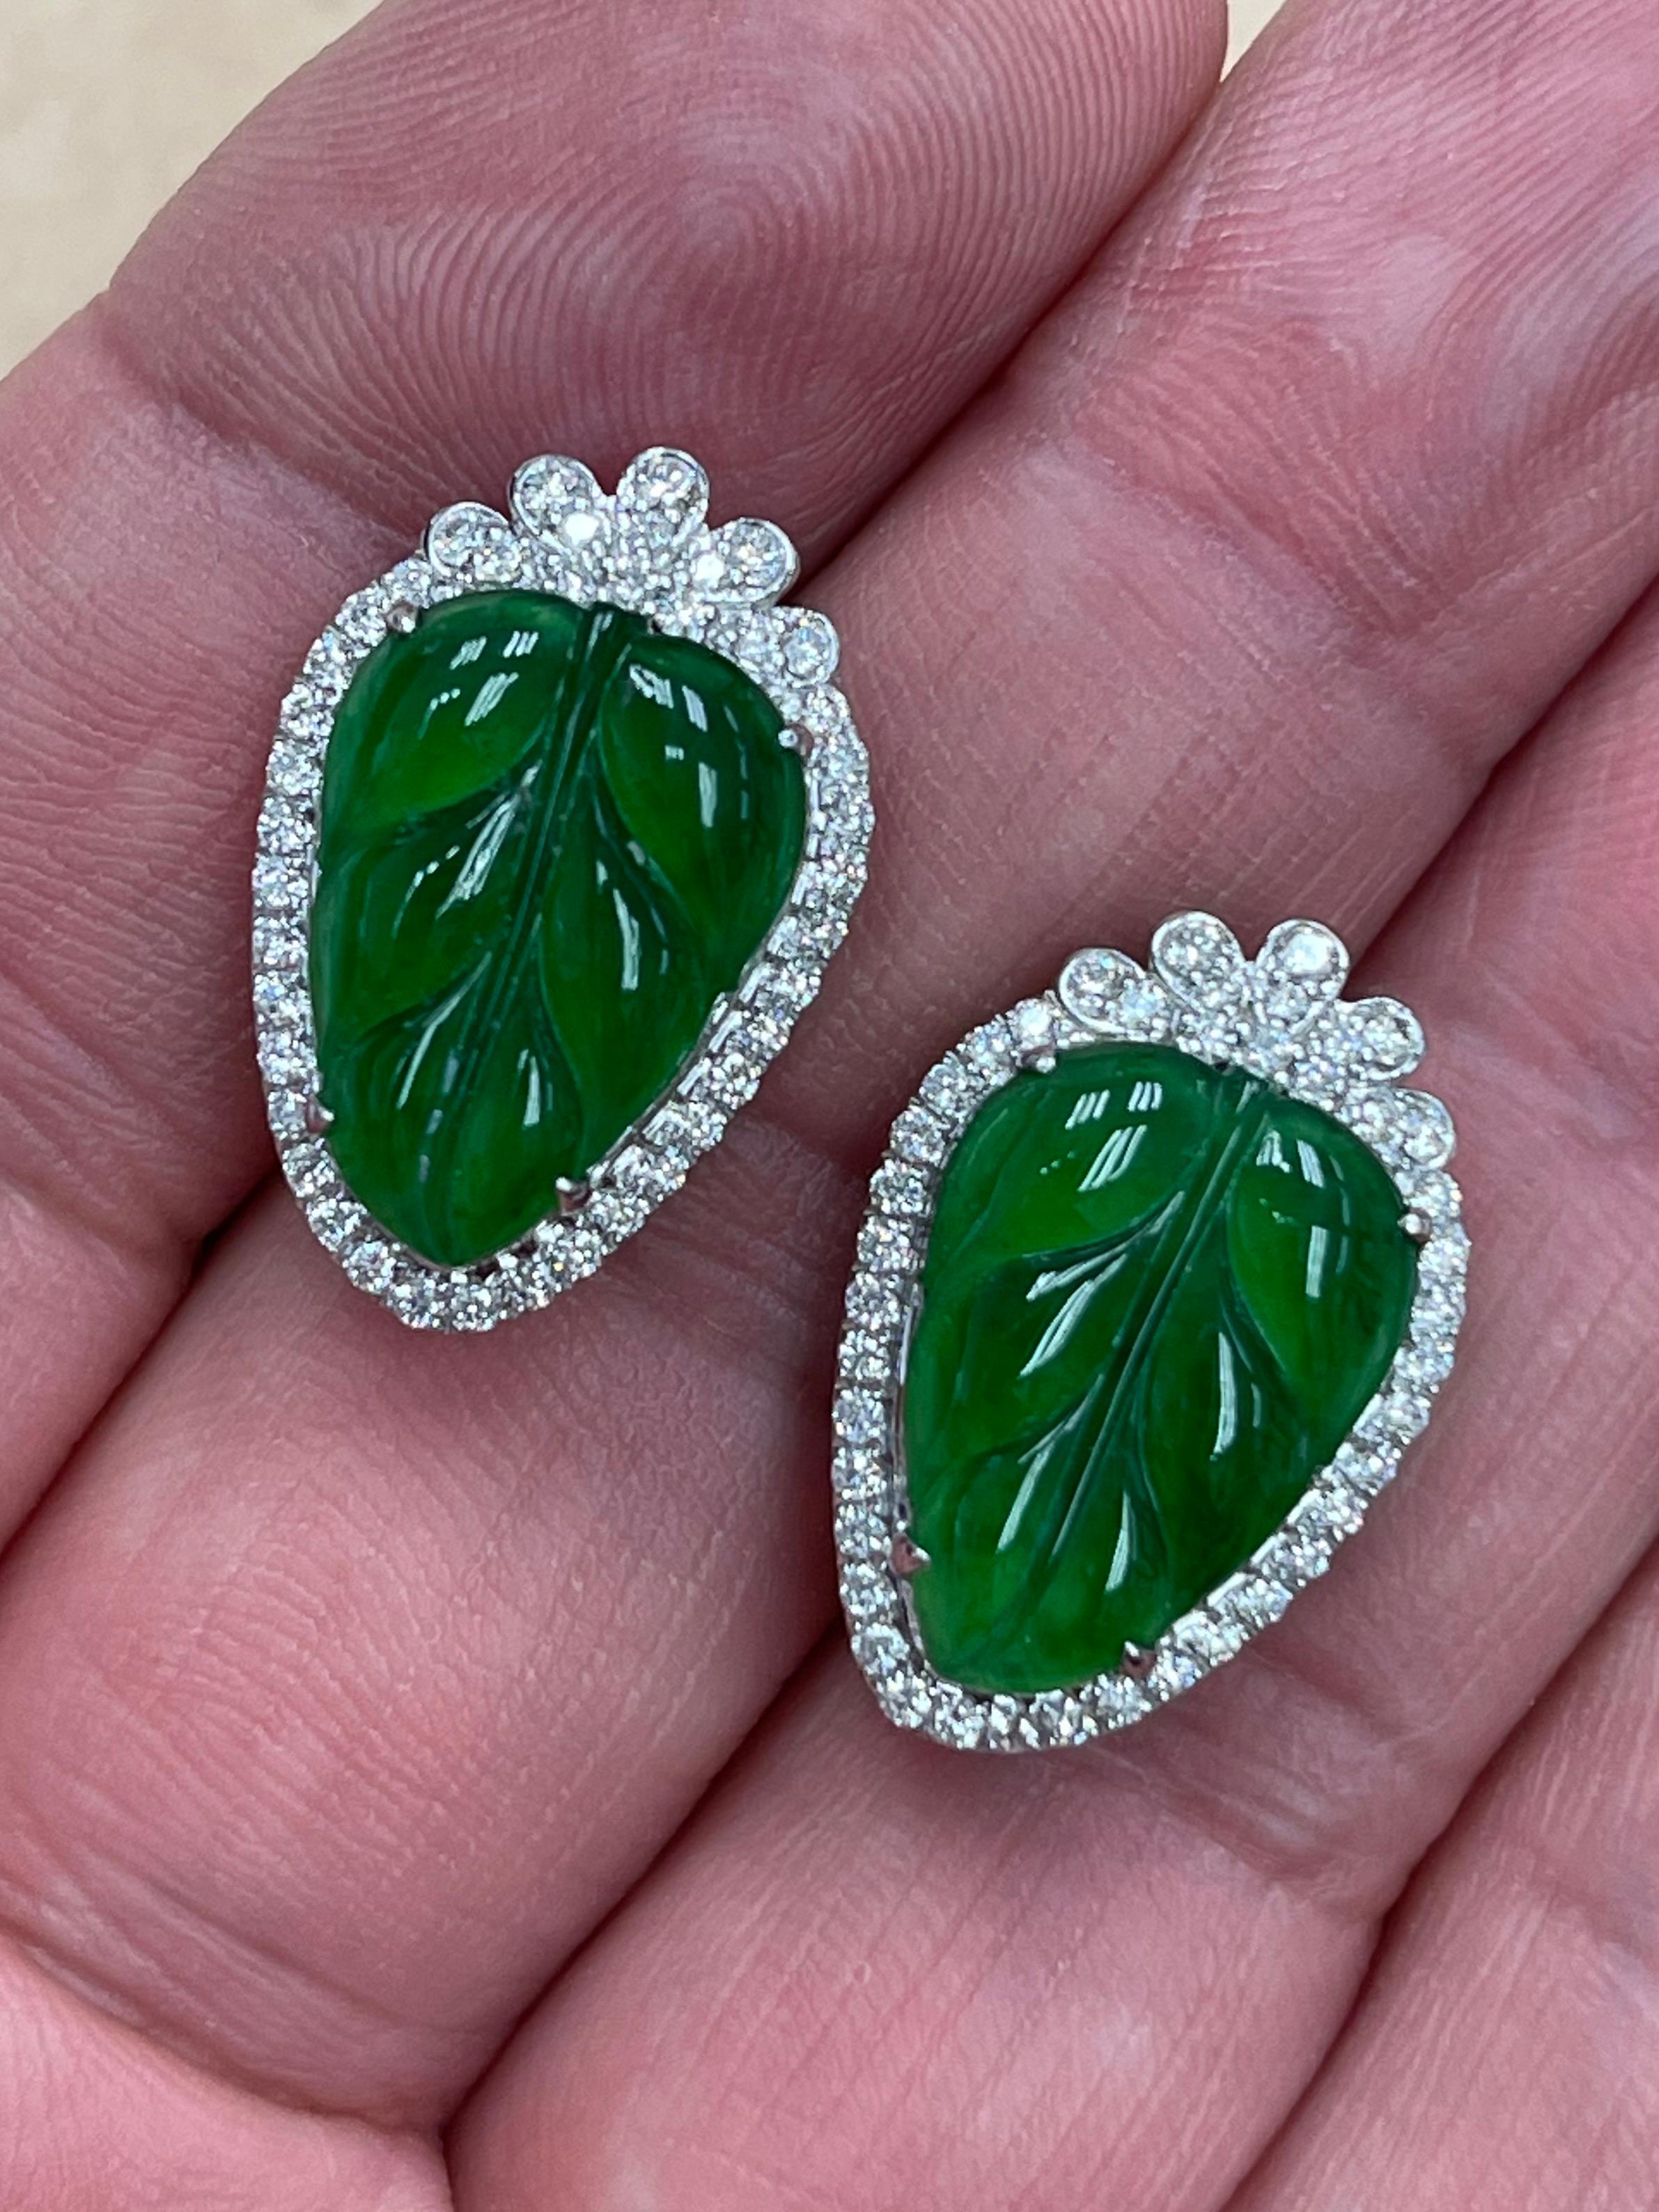 green jade earrings